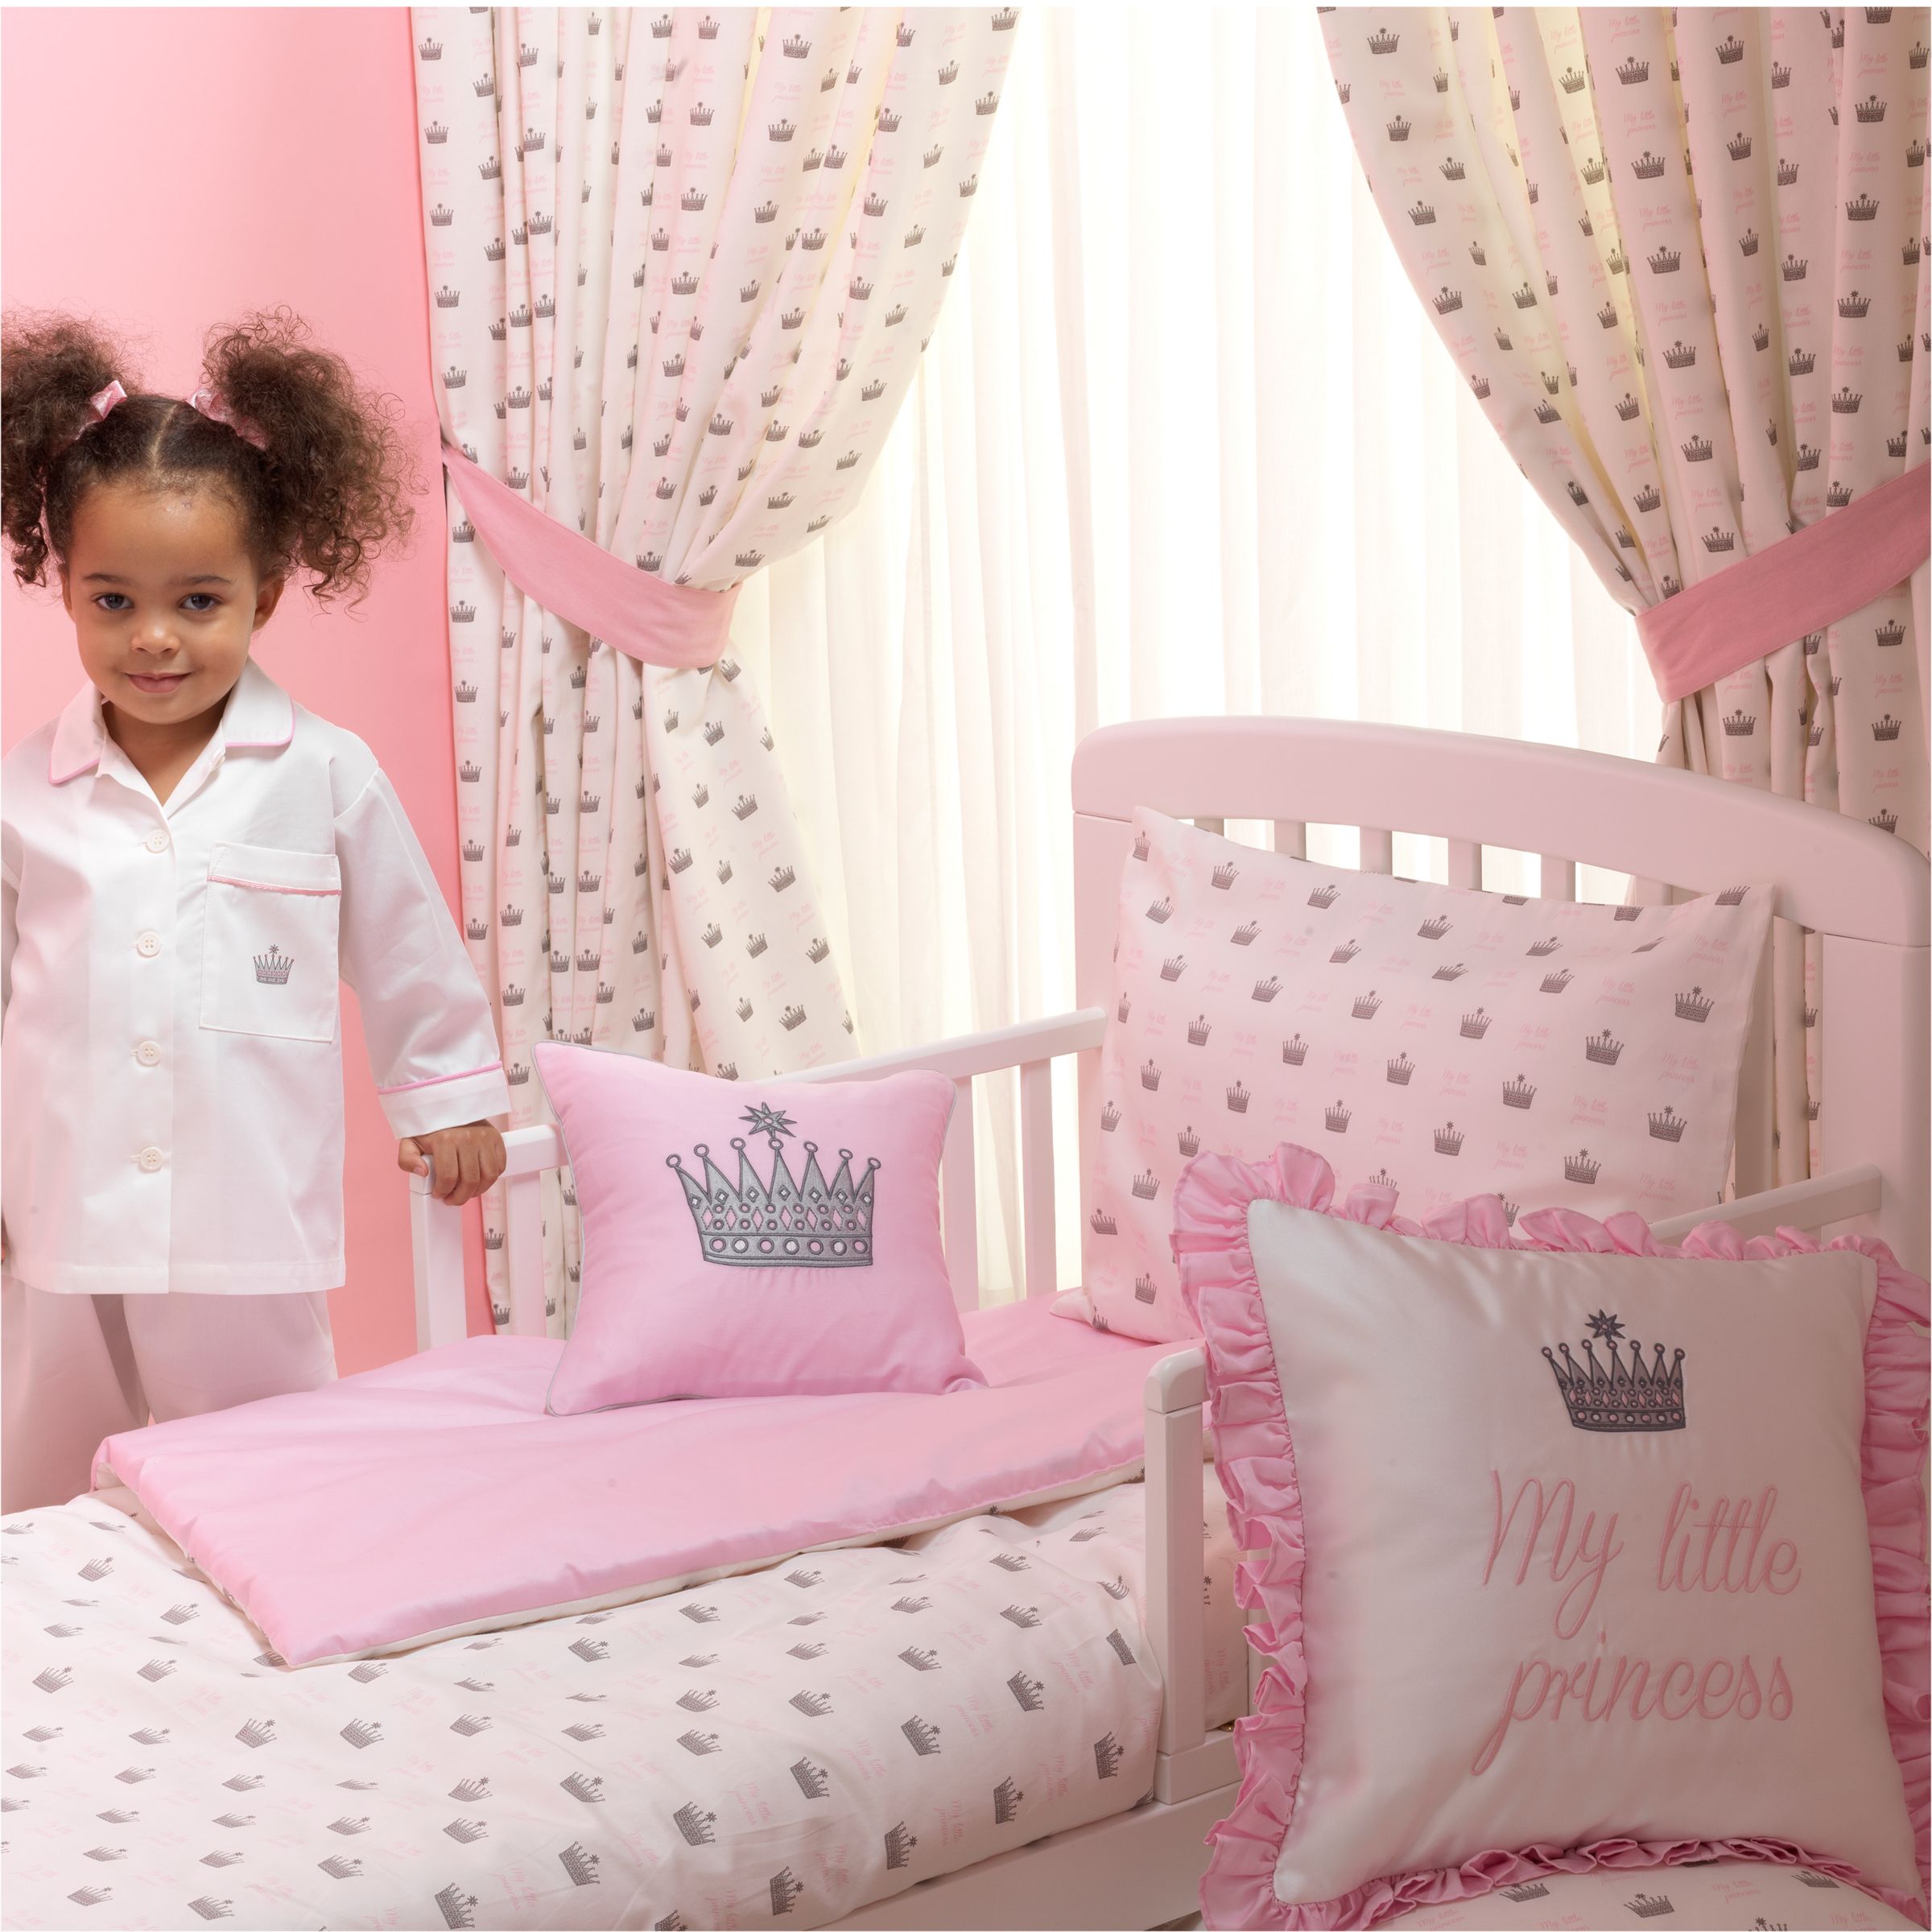 Rachel Riley My Little Princess Duvet Cover And Pillowcase Set